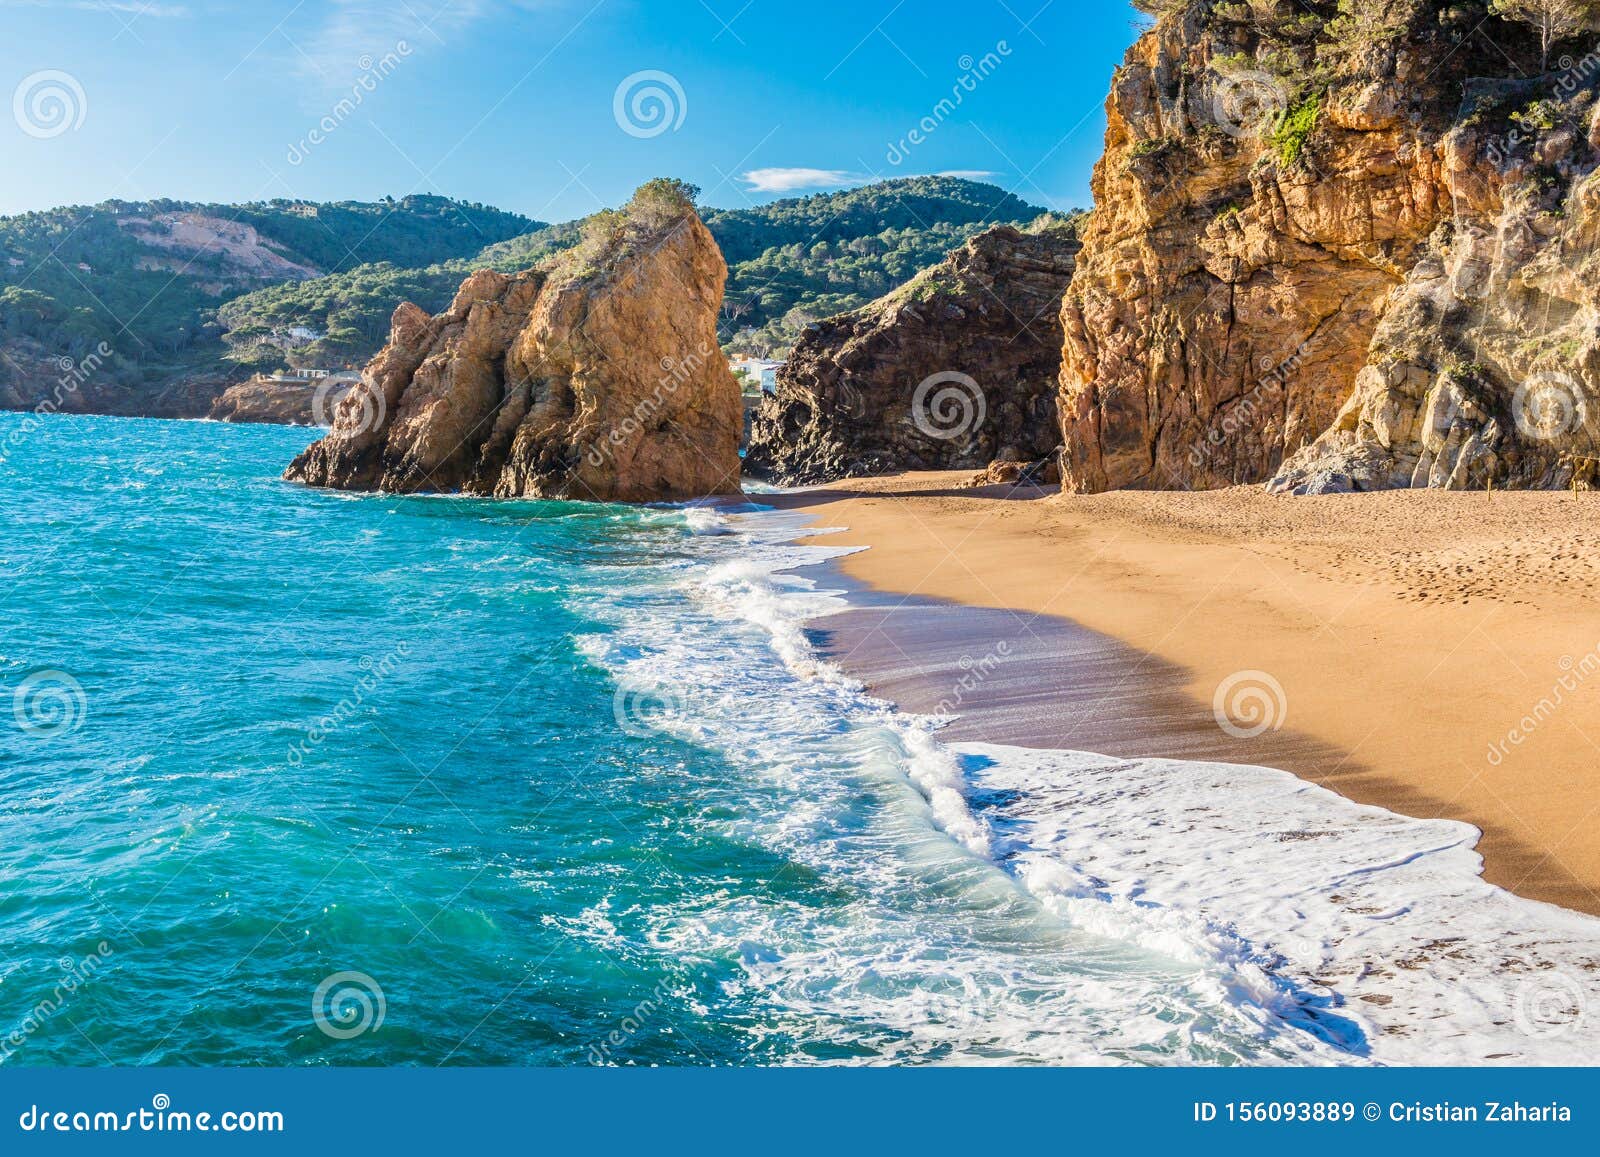 the iconic beach of illa roja catalonia, spain